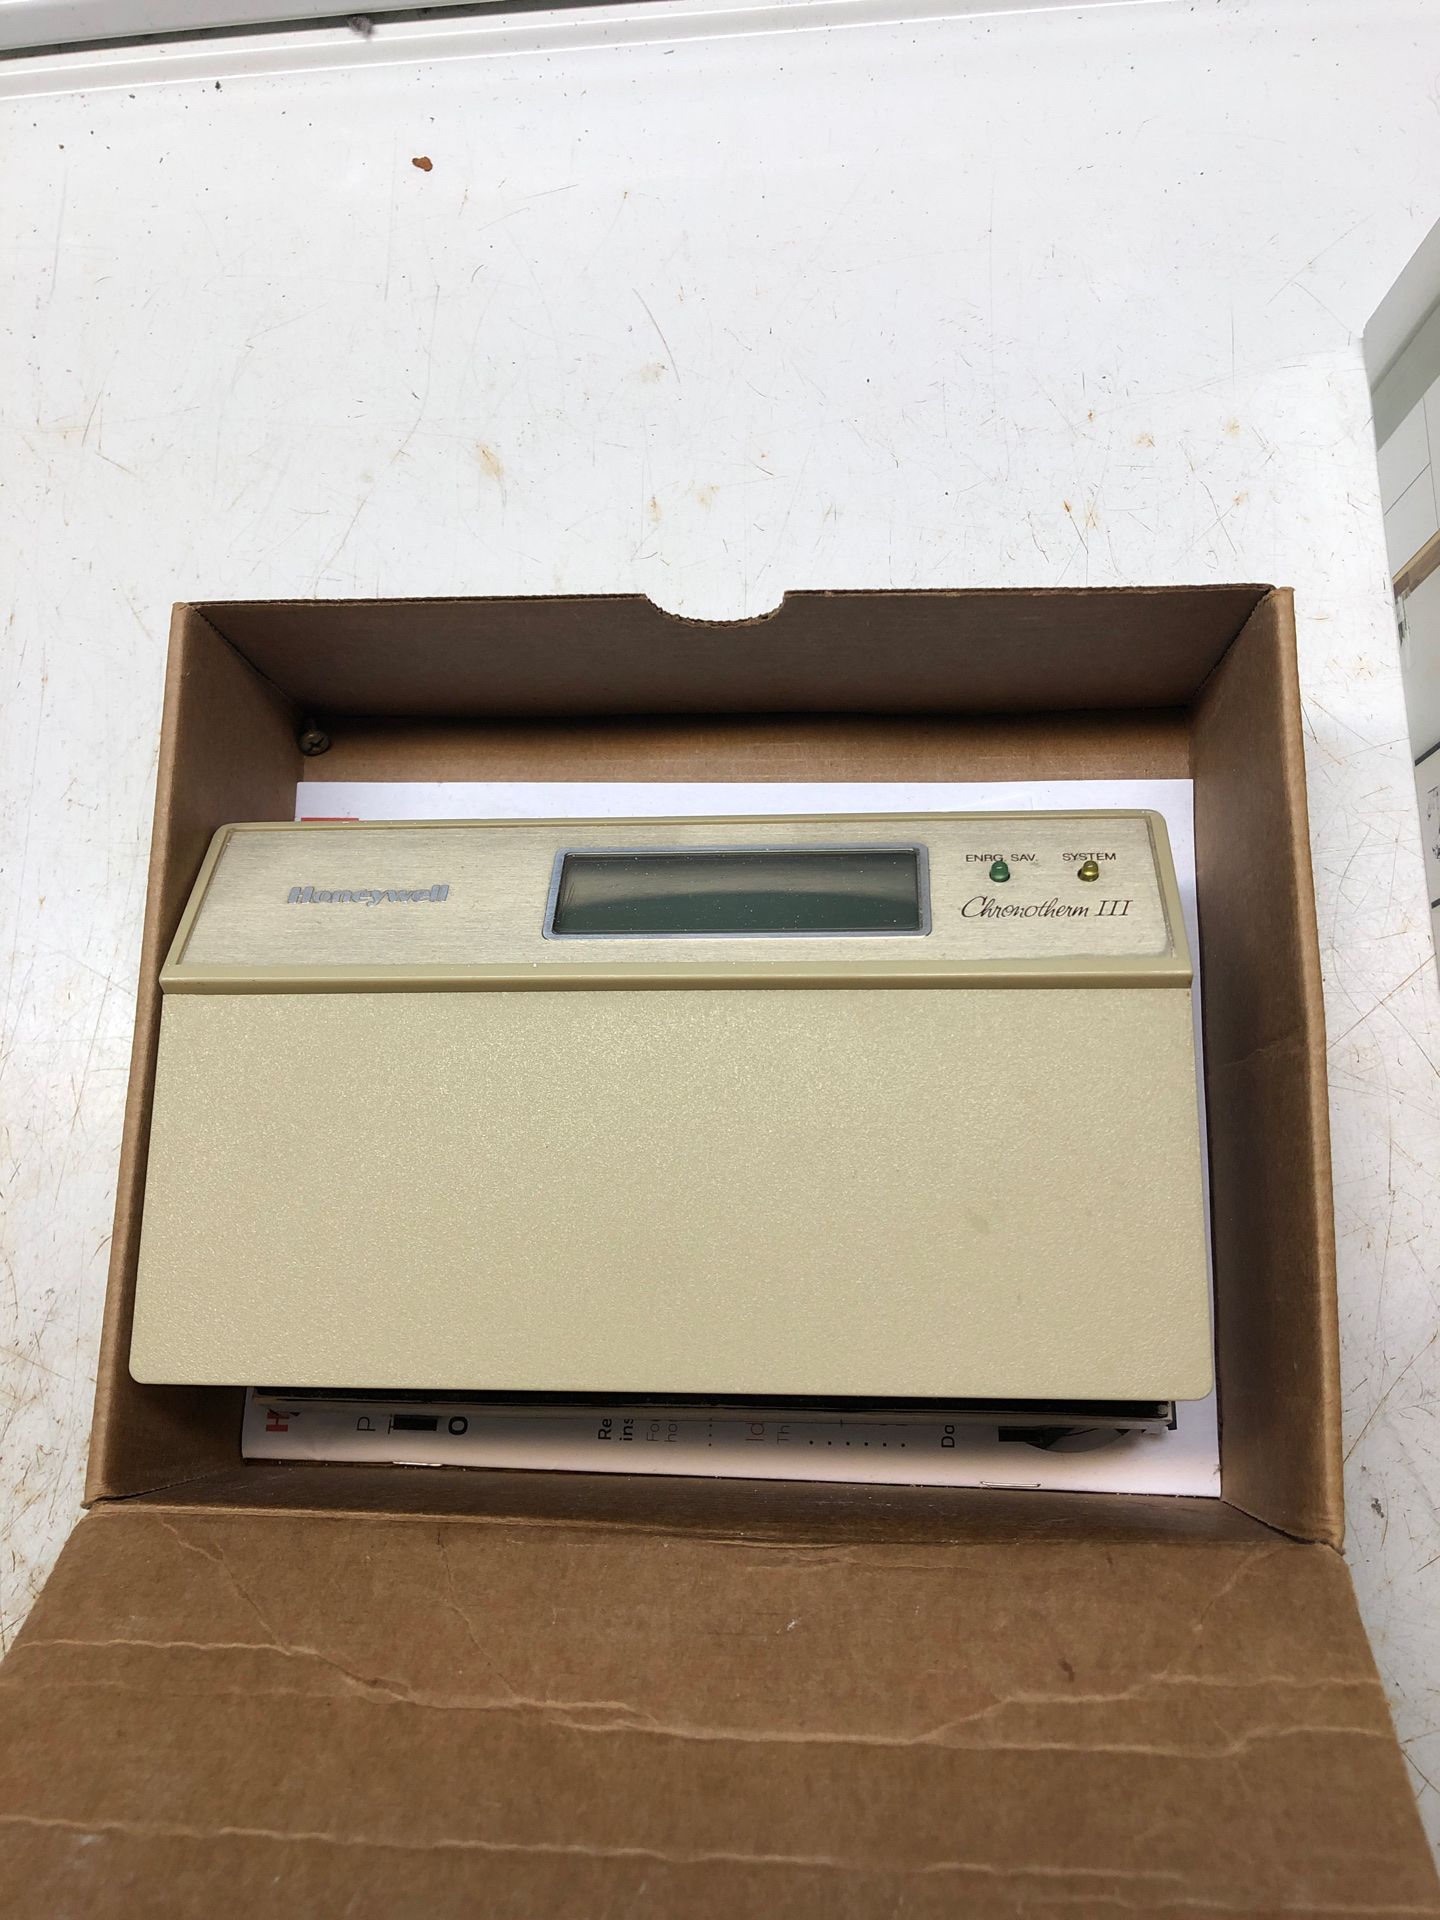 Honeywell Vintage Programmable Thermostat